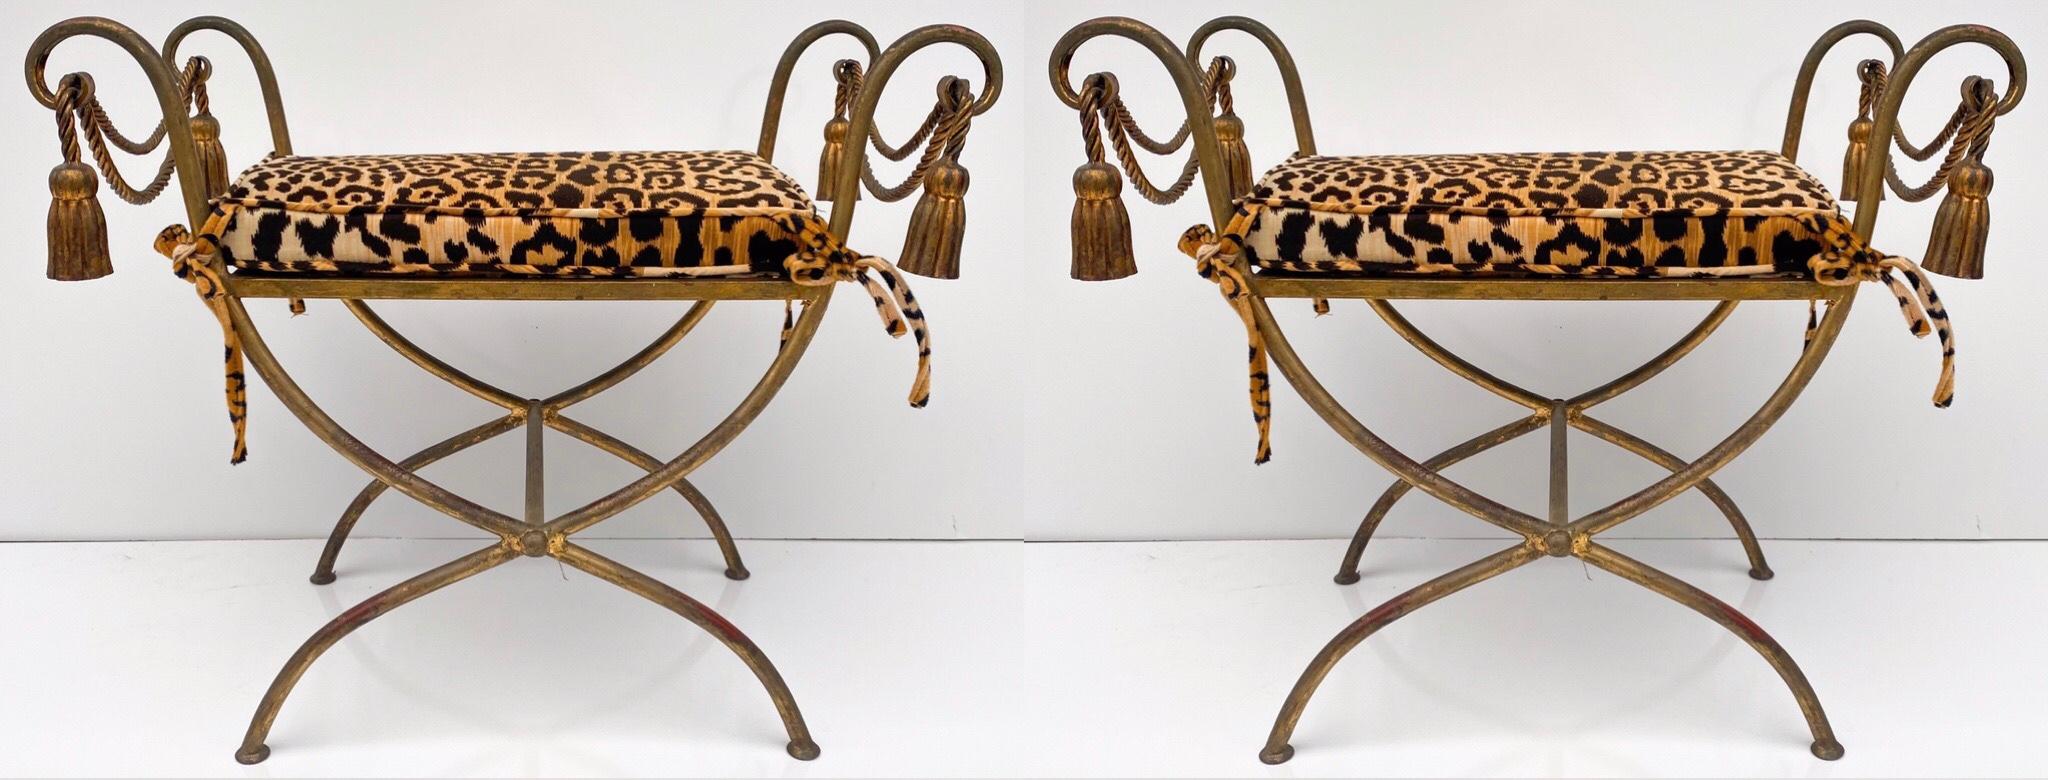 20th Century Hollywood Regency Italian Gilt Metal Tassel Bench in Leopard, a Pair For Sale